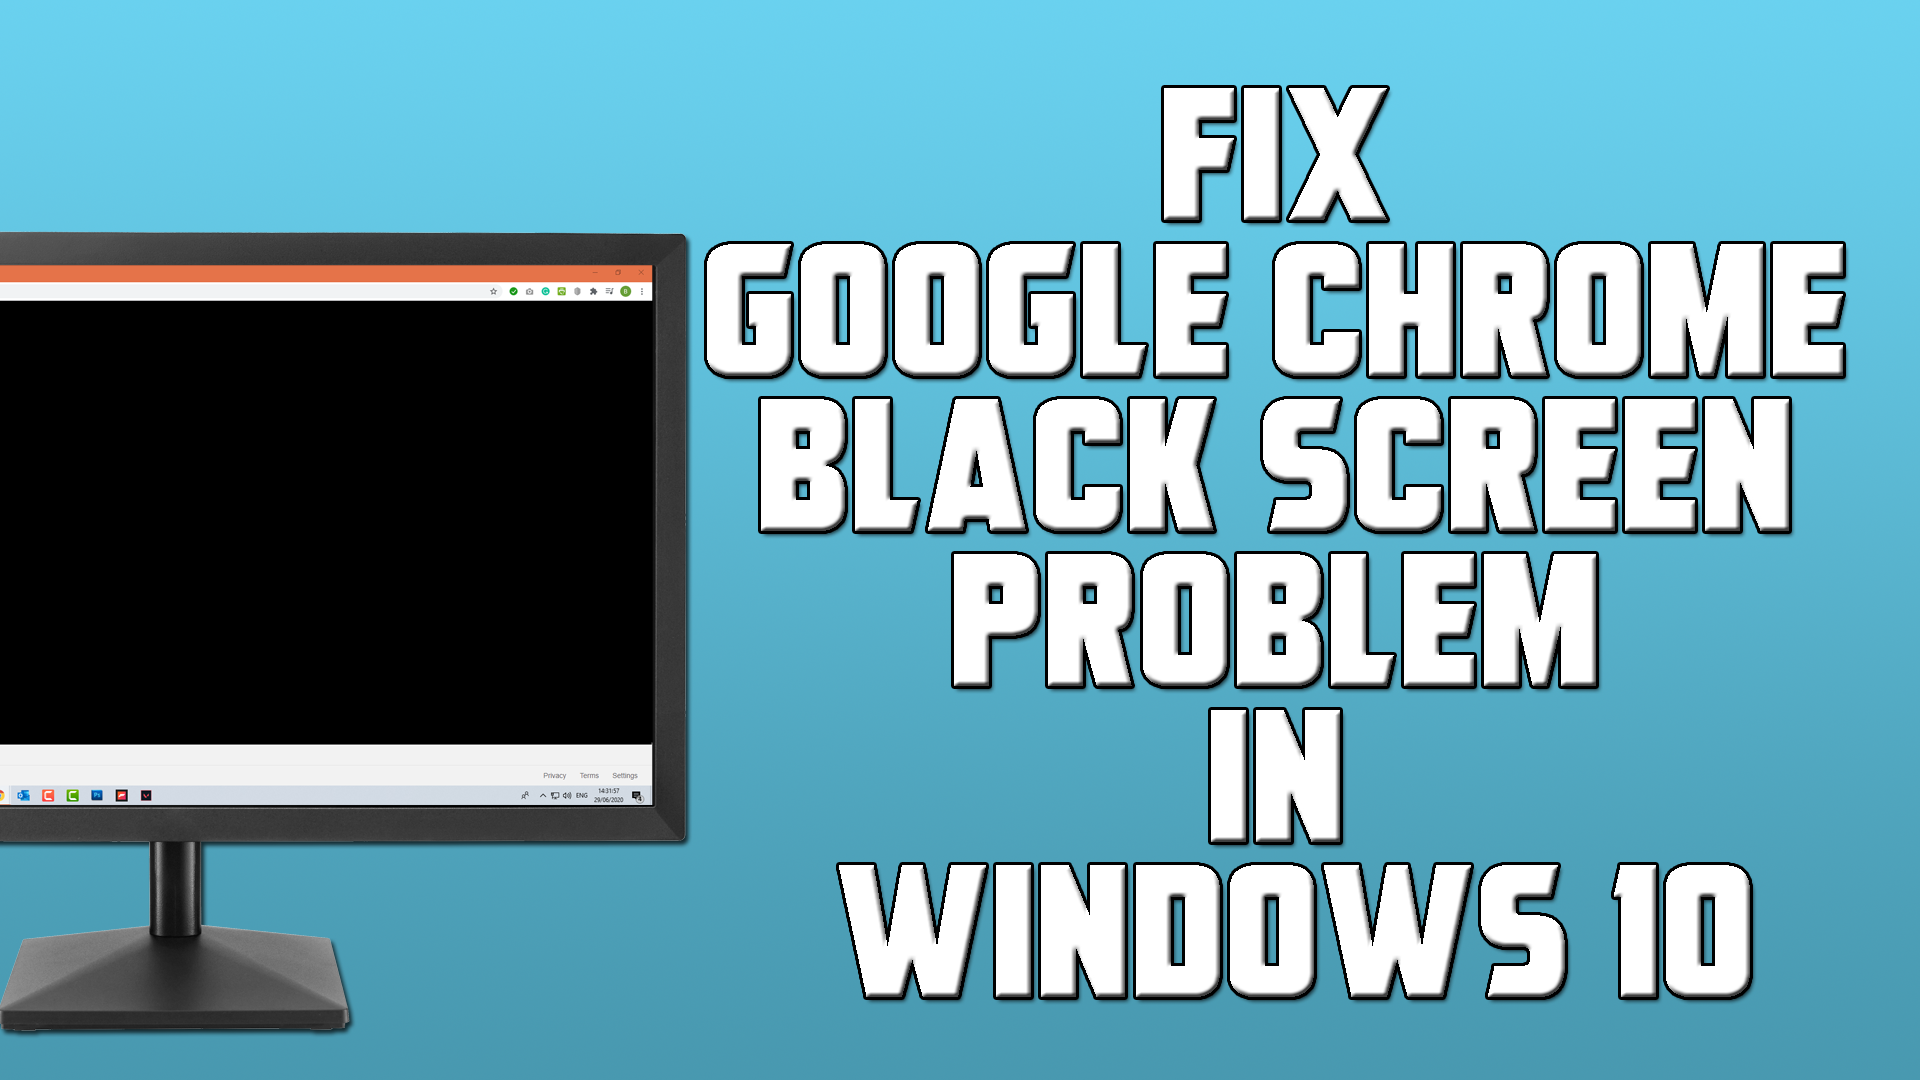 Fix Google Chrome Black Screen Problem in Windows 10 - Malware Removal